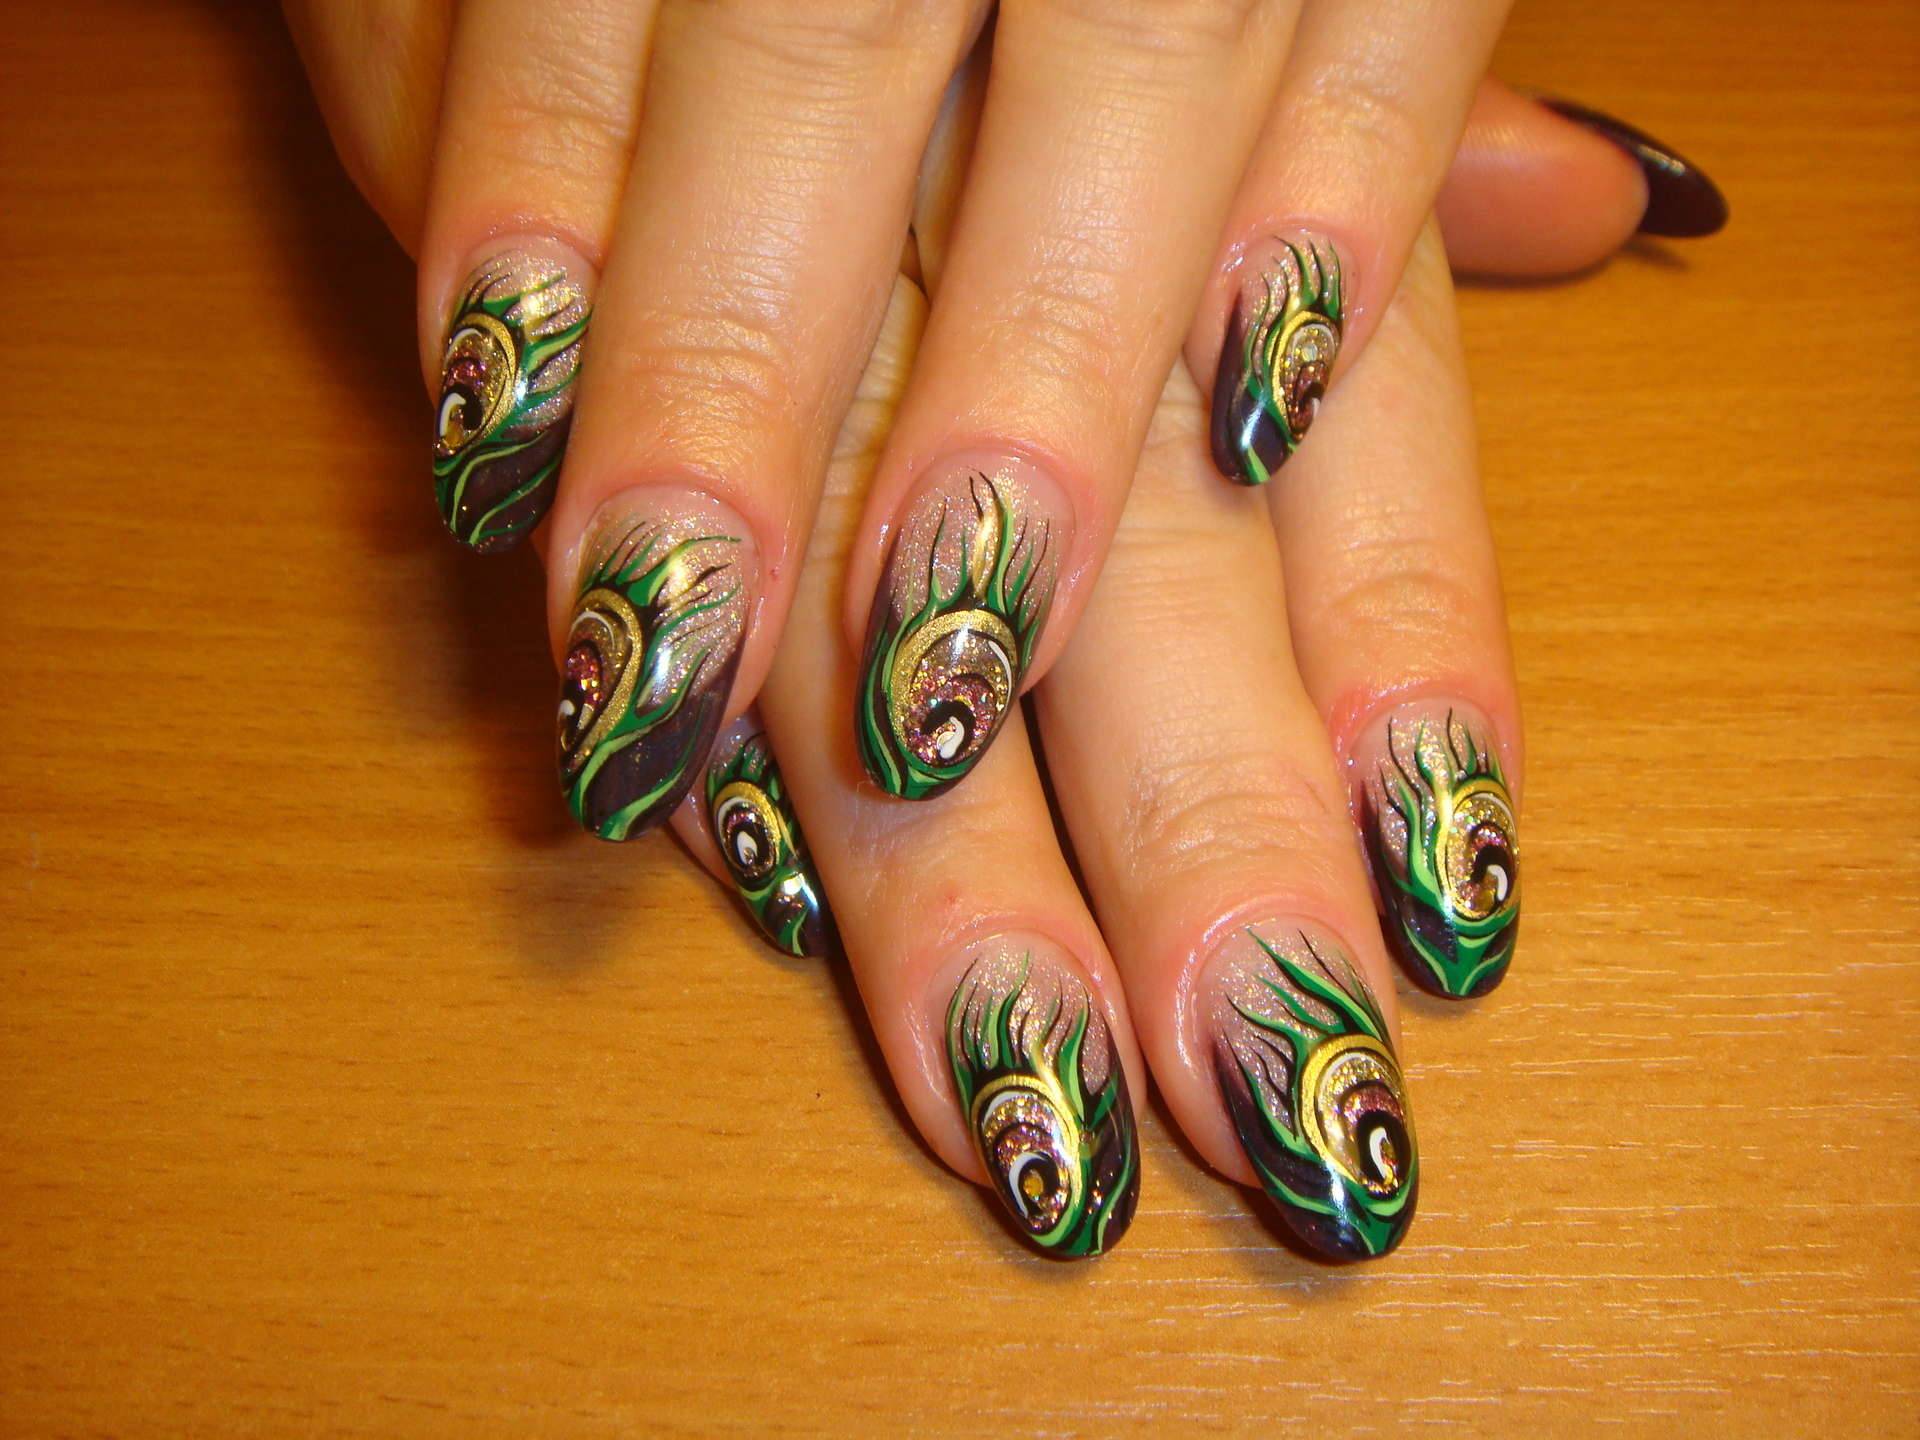 Техника рисования акриловыми красками на ногтях для новичков » womanmirror
техника рисования акриловыми красками на ногтях для новичков